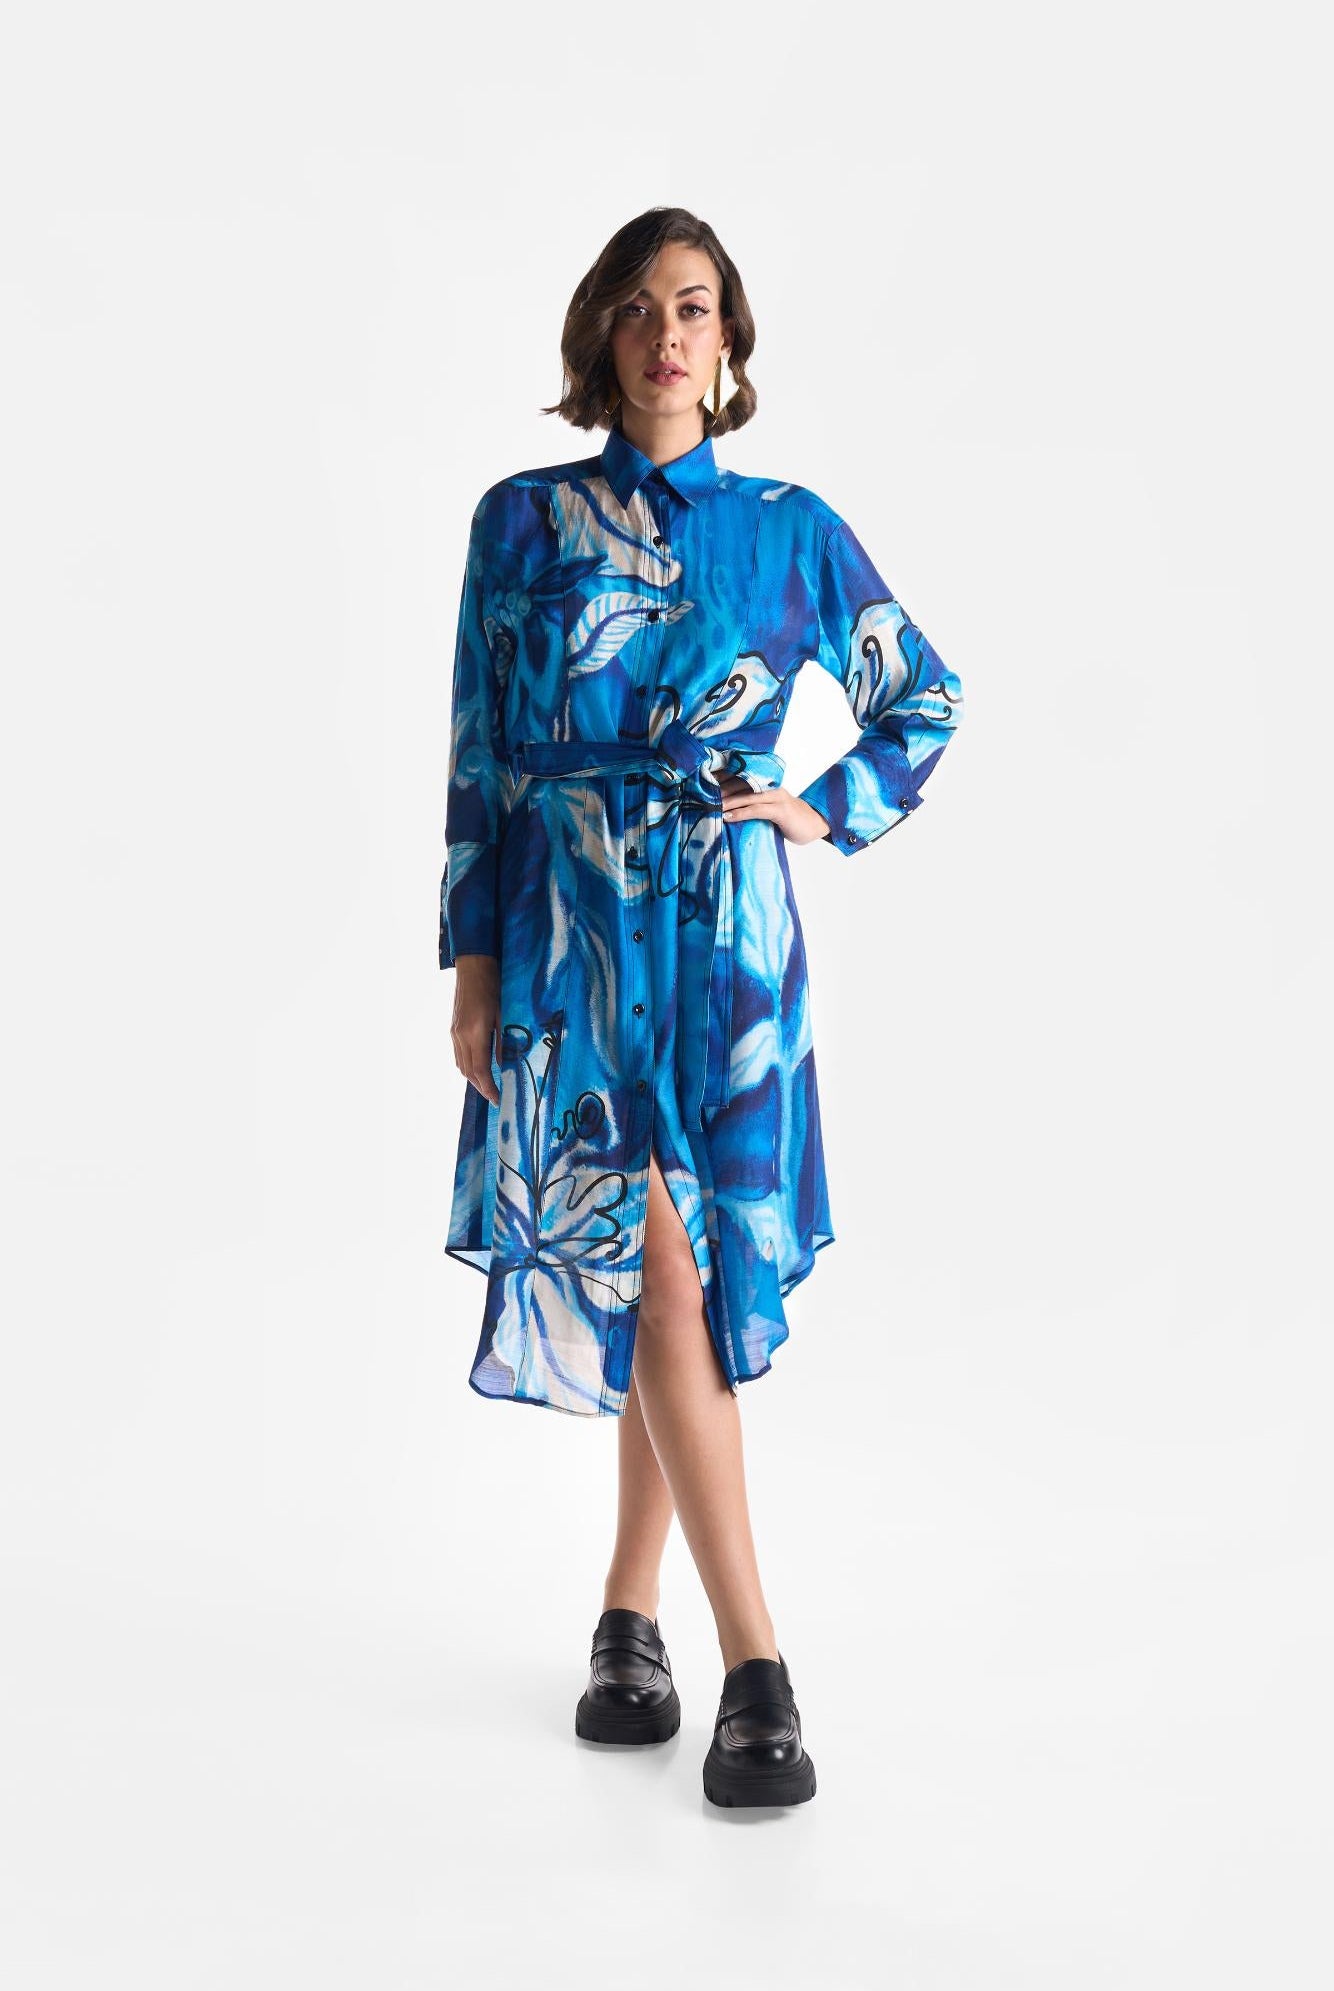 Lapis Lazuli Shirt Dress - CiceroniDressesEkastories